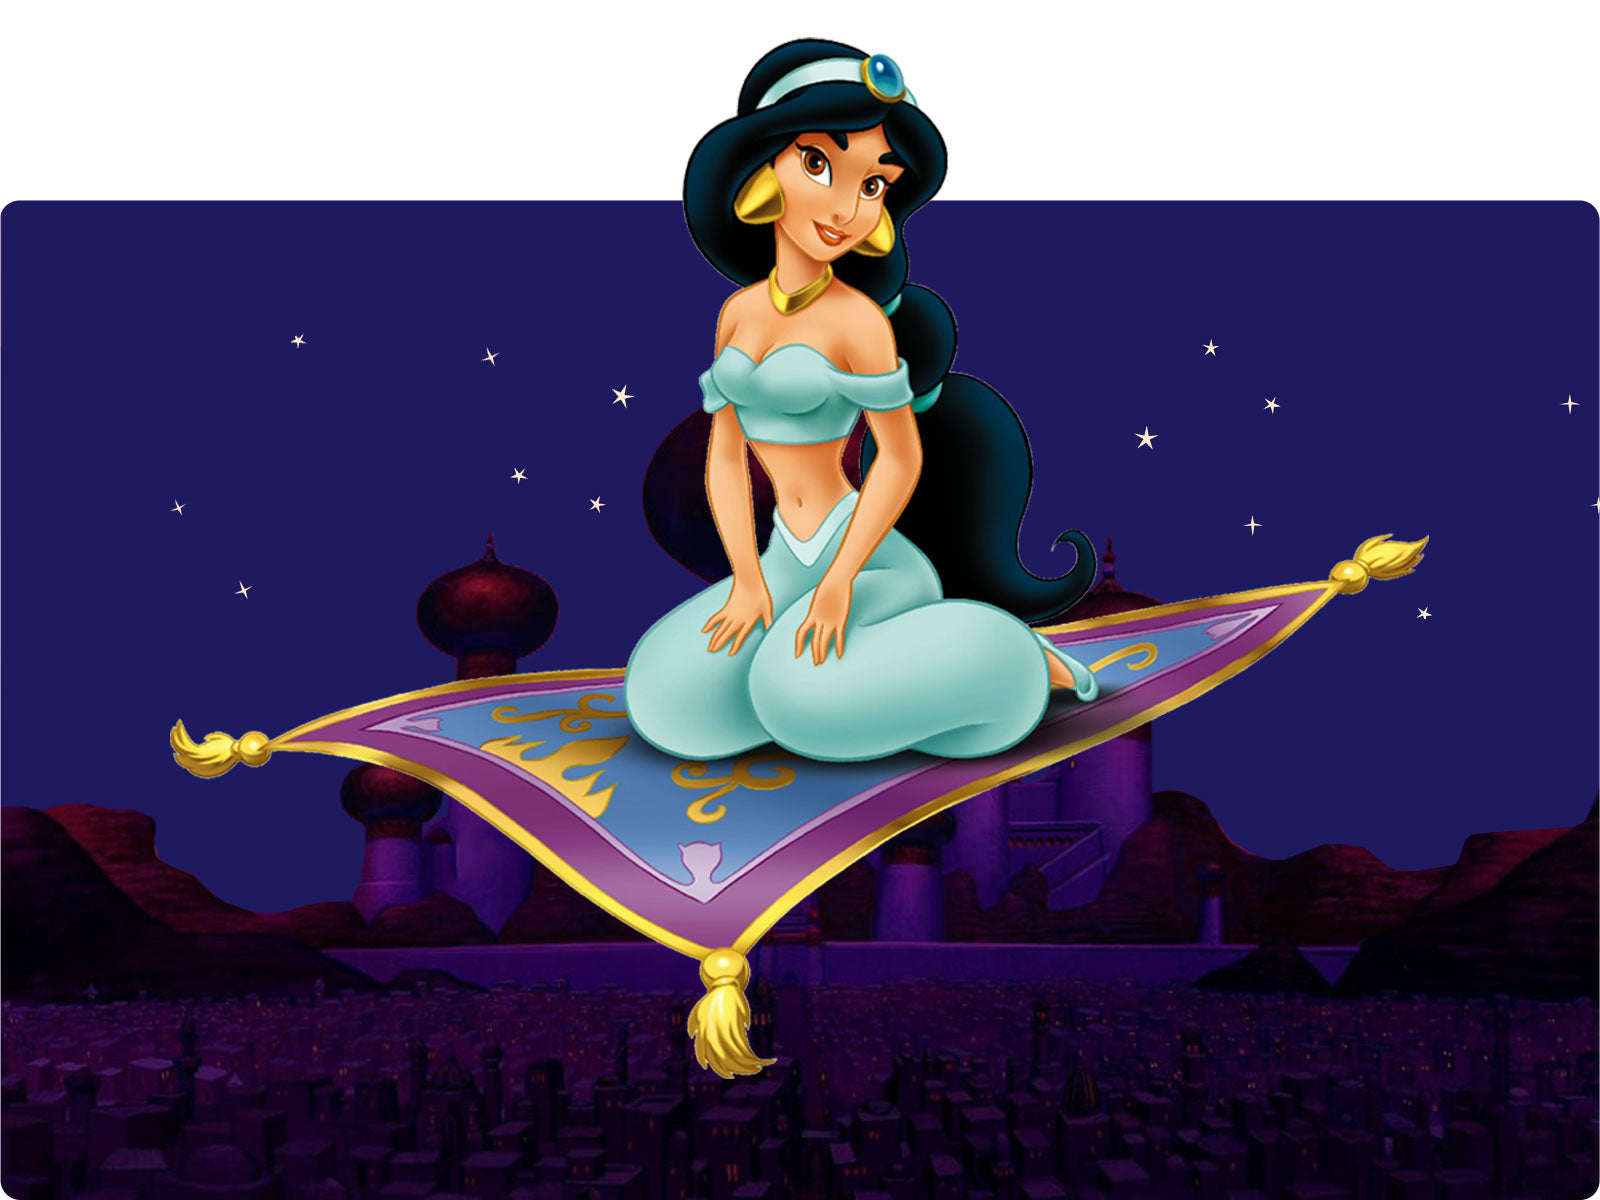 Buy Disney Princess Pj's from Aladdin at Character.com